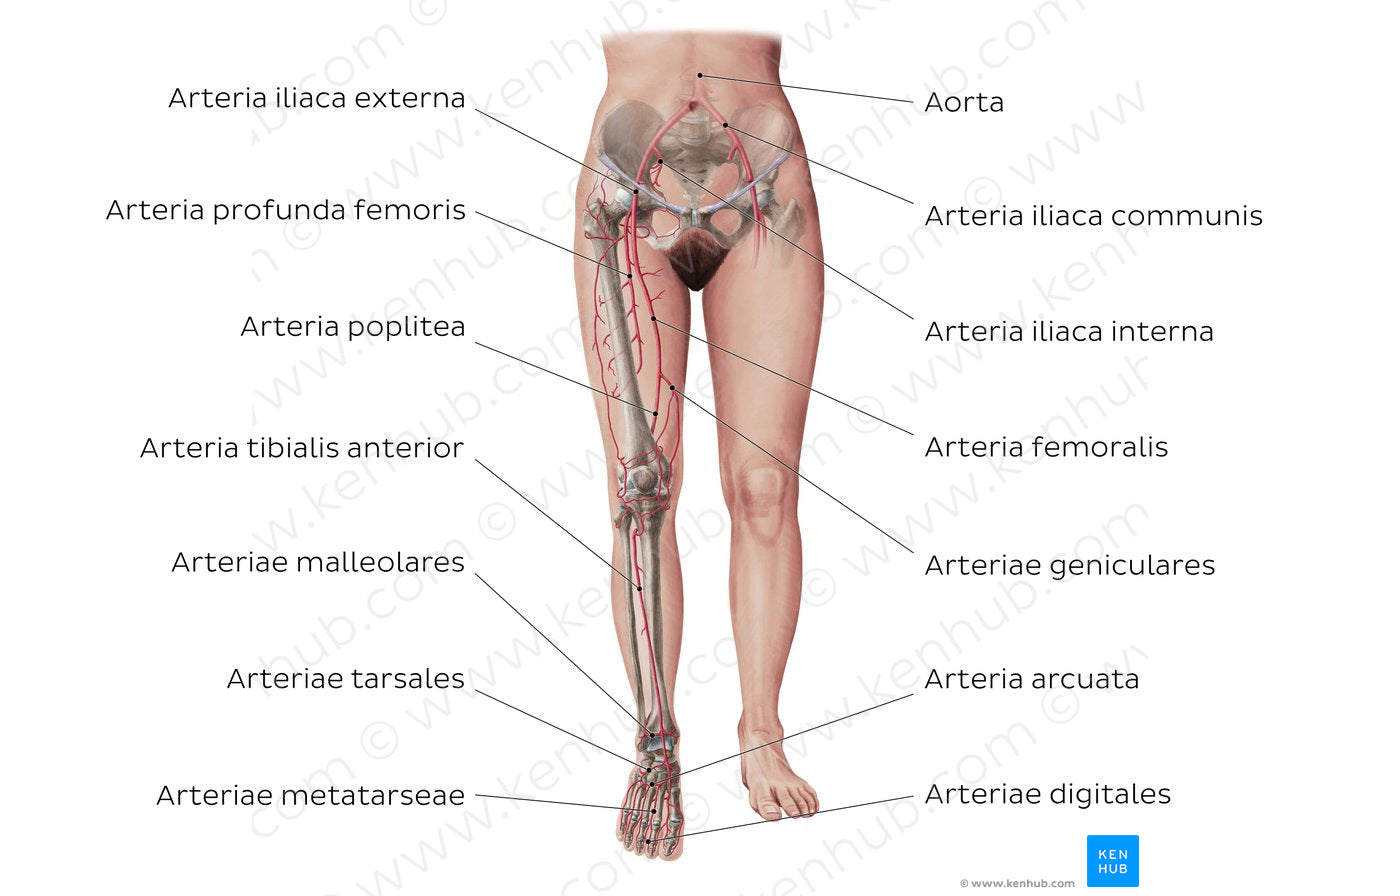 Main arteries of the lower limb (Latin)